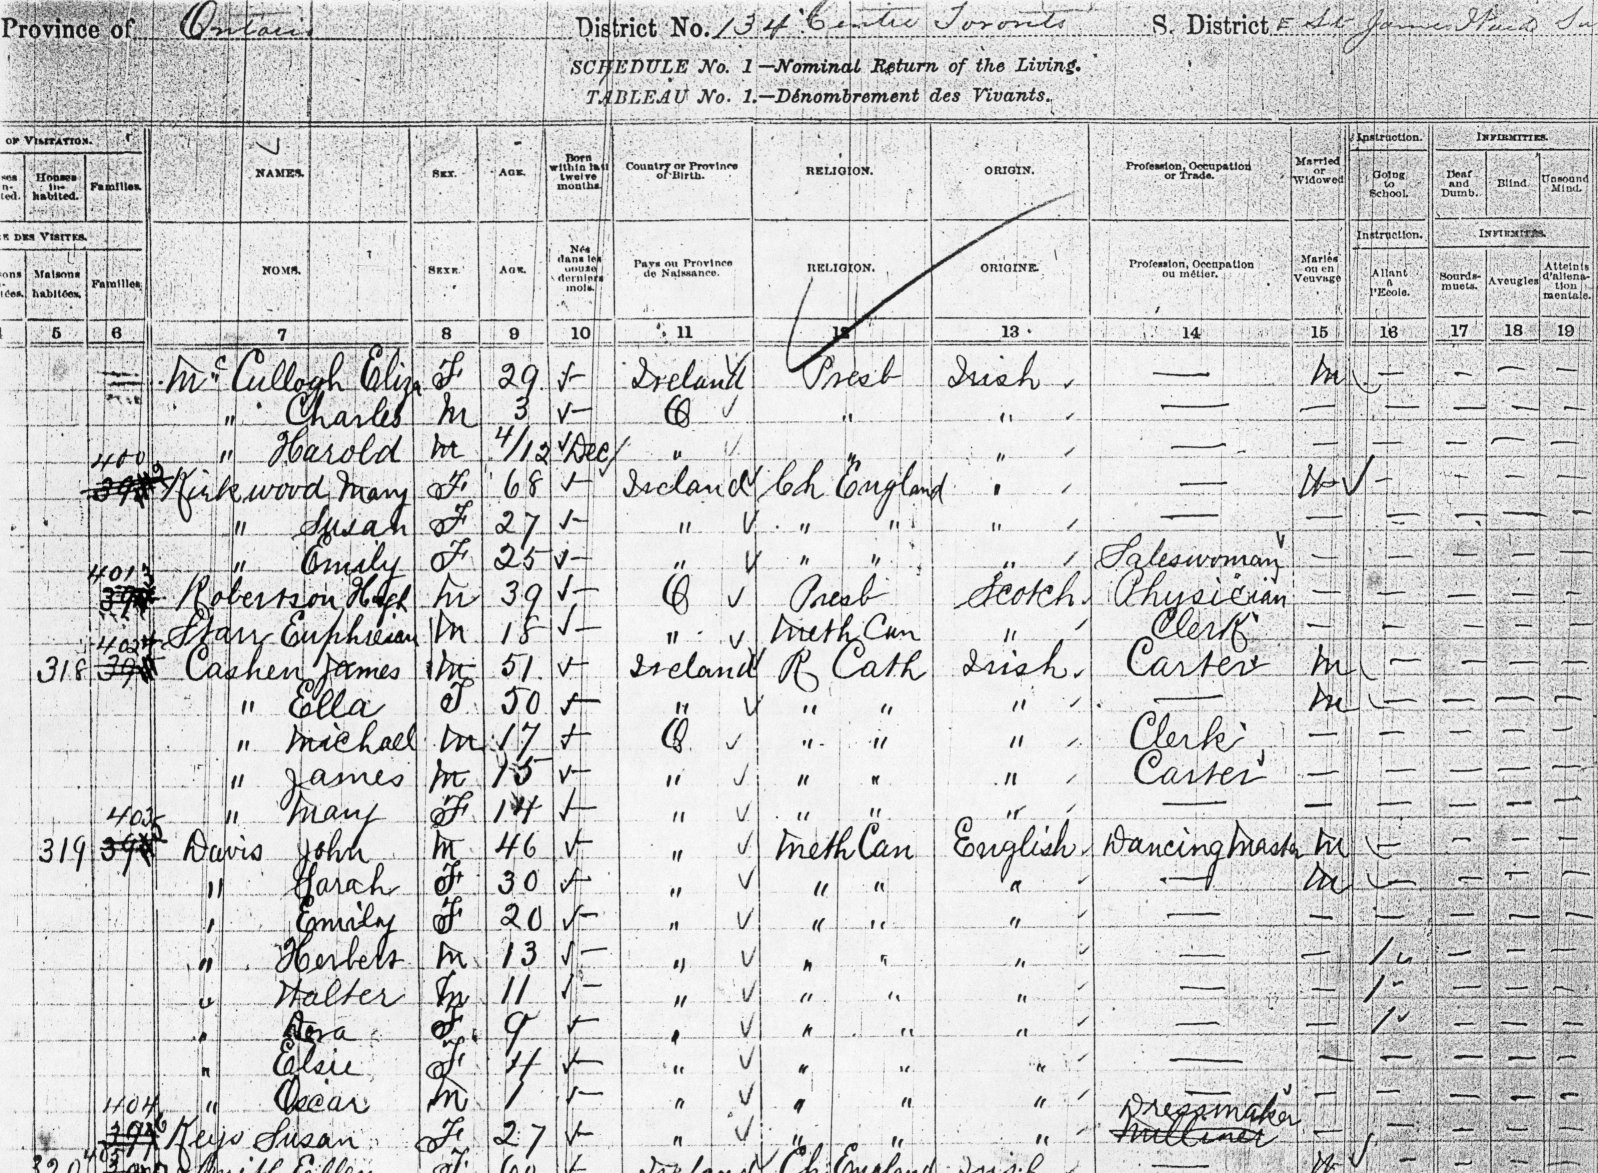 1881 Ontario Census record for John Freeman Davis